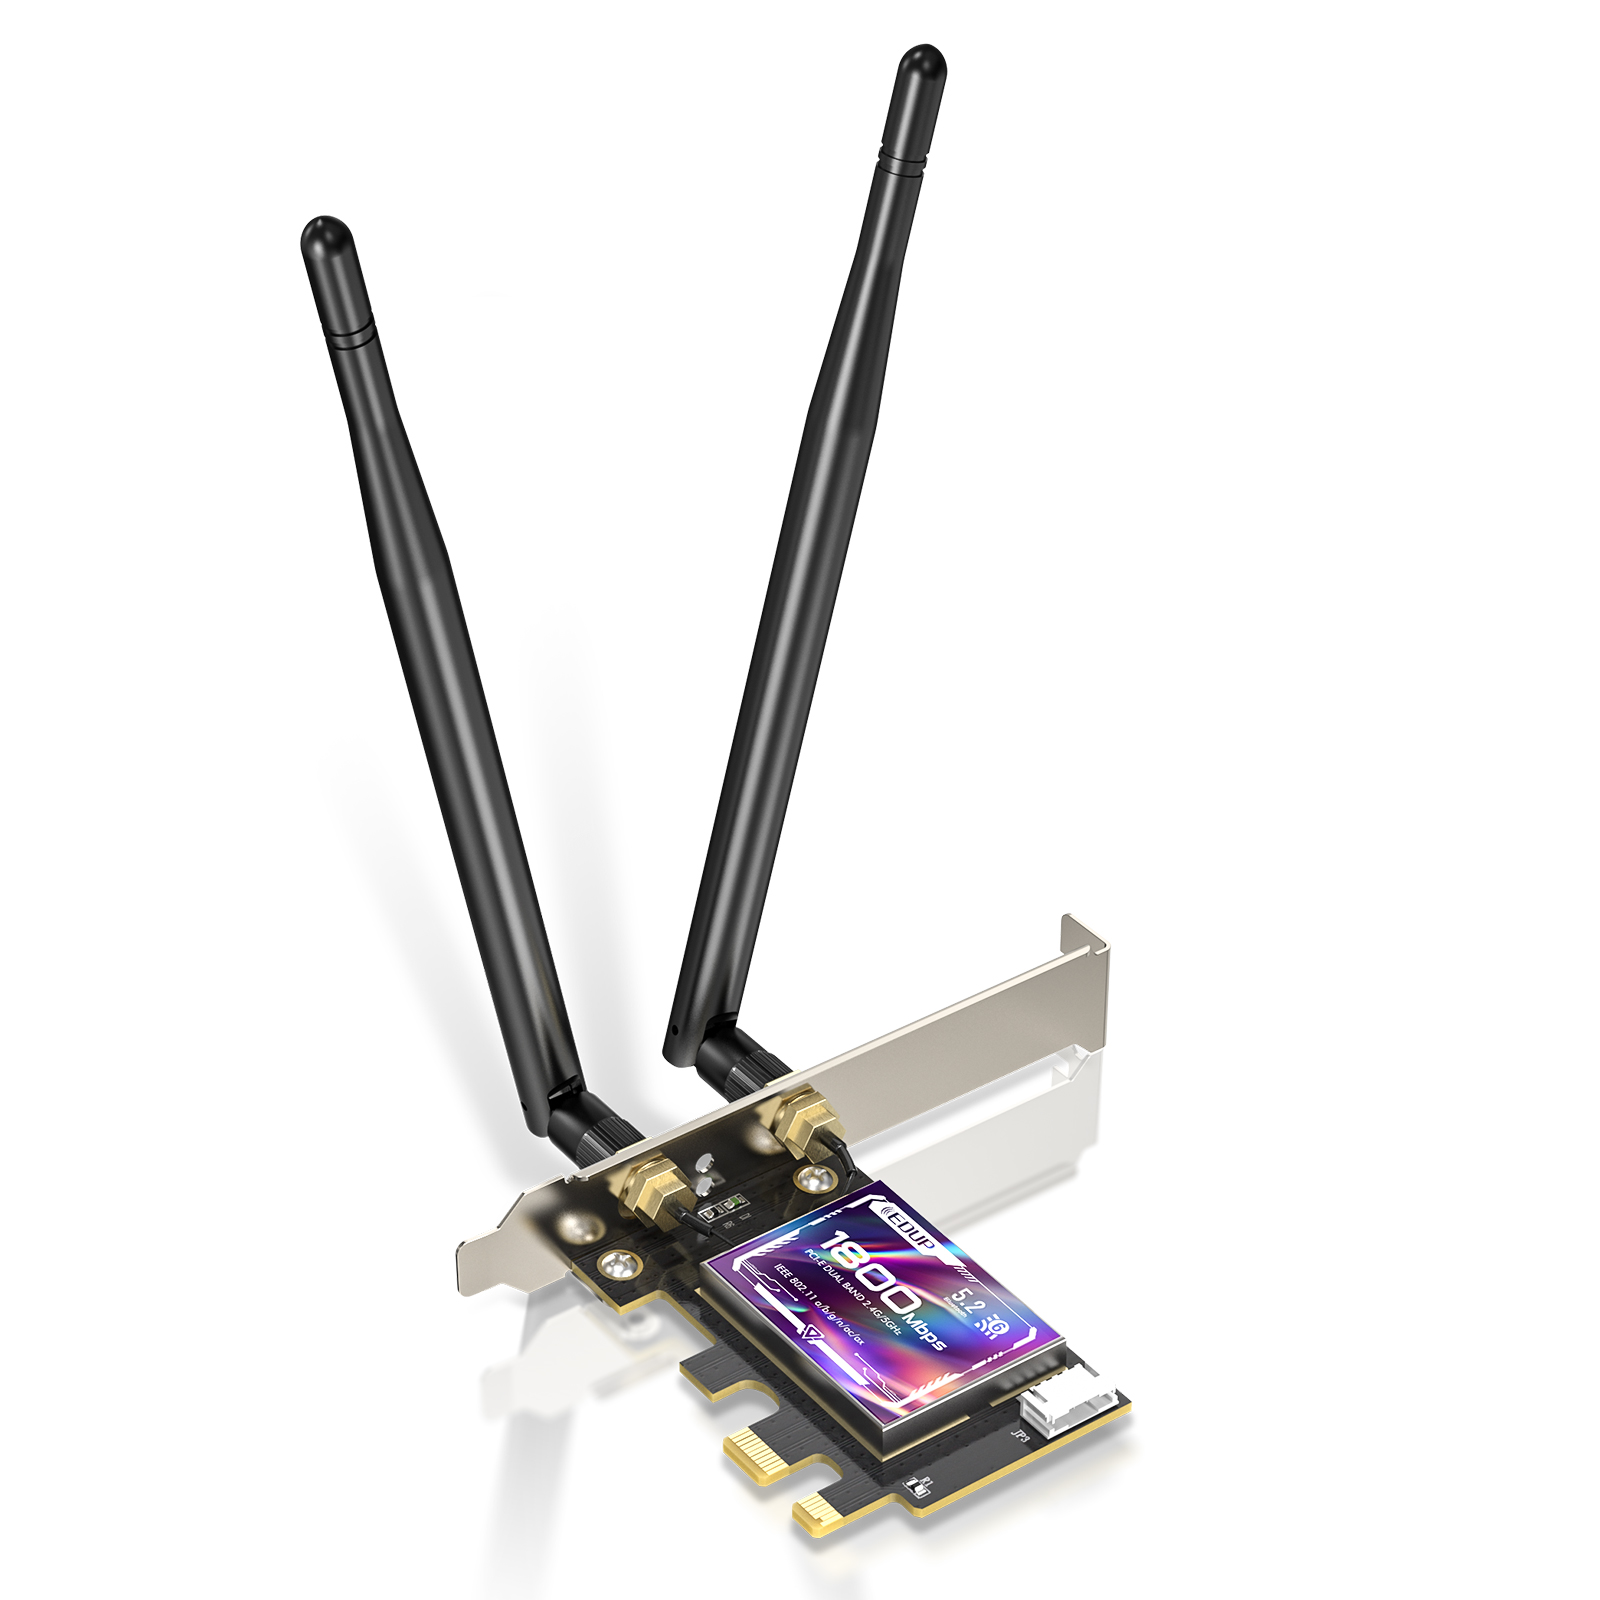 Fenvi AX3000 Wi-Fi 6 3000Mbps Wireless PCIe For Bluetooth 5.2 WiFi Adapter Intel  AX200 Wi-Fi Card 802.11AX 2.4G/5Ghz PC Win10/11 Color: WI-FI 6 PCE-AX200